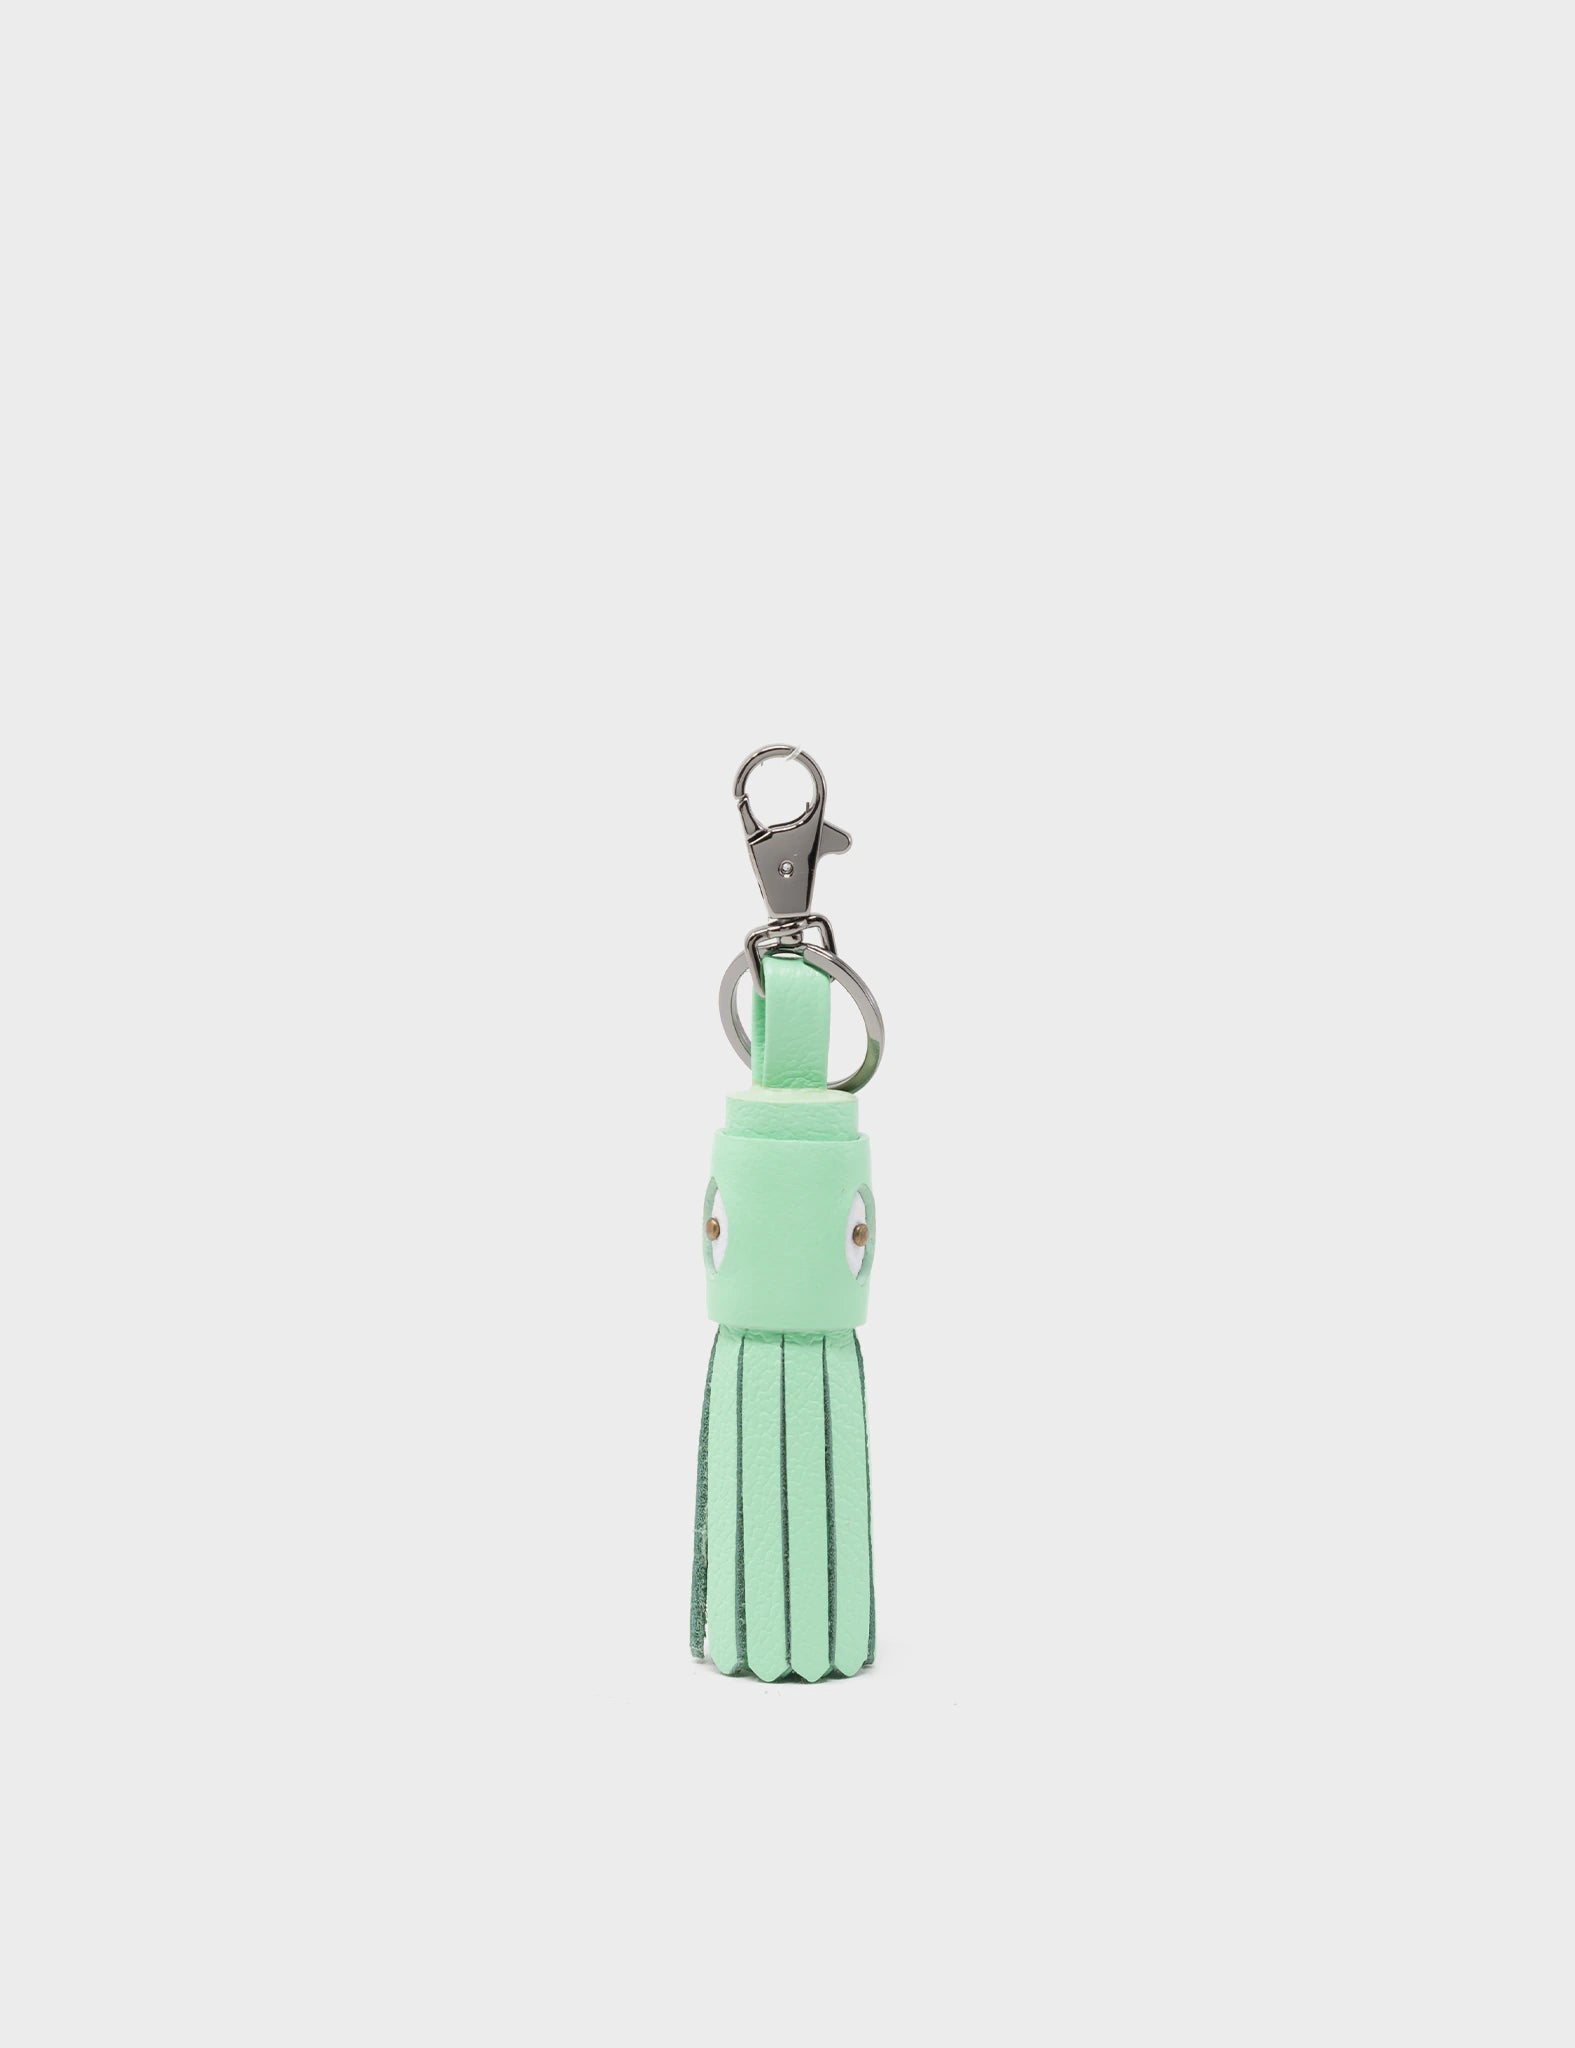 Callie Marie Hue Charm - Ash Green Leather Keychain 